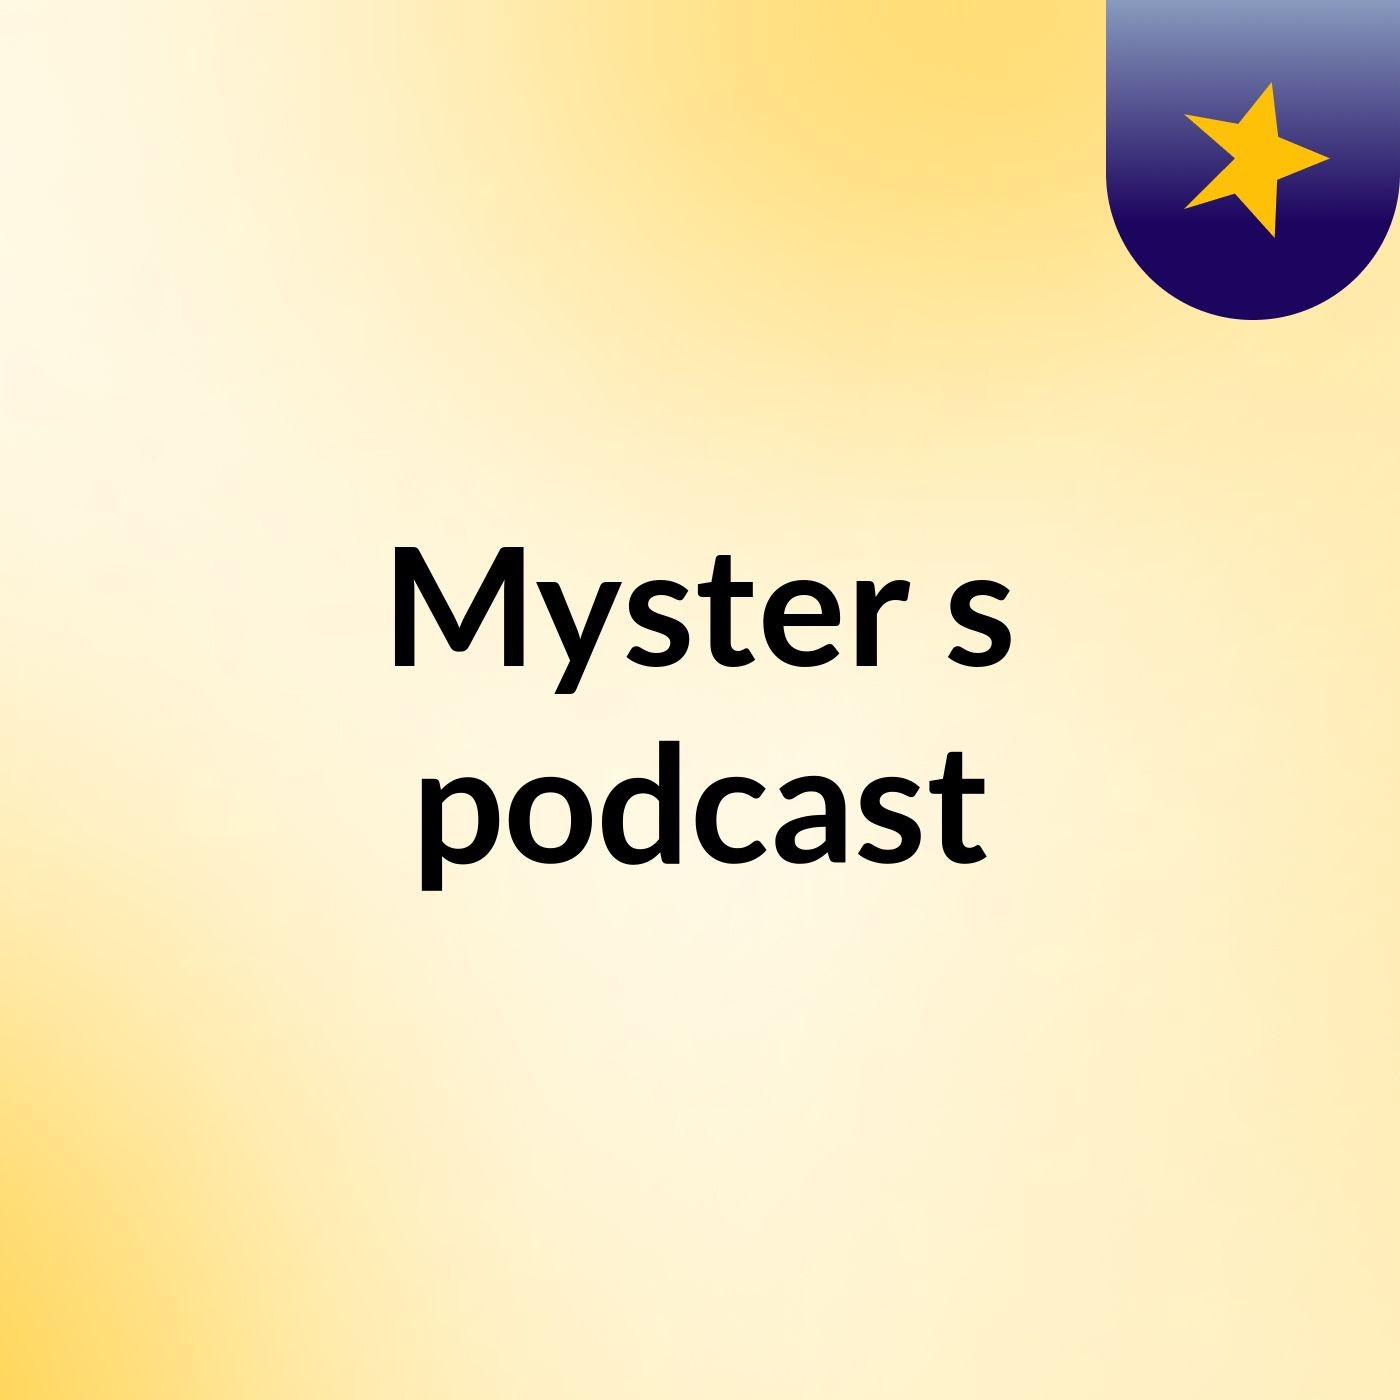 Myster's podcast